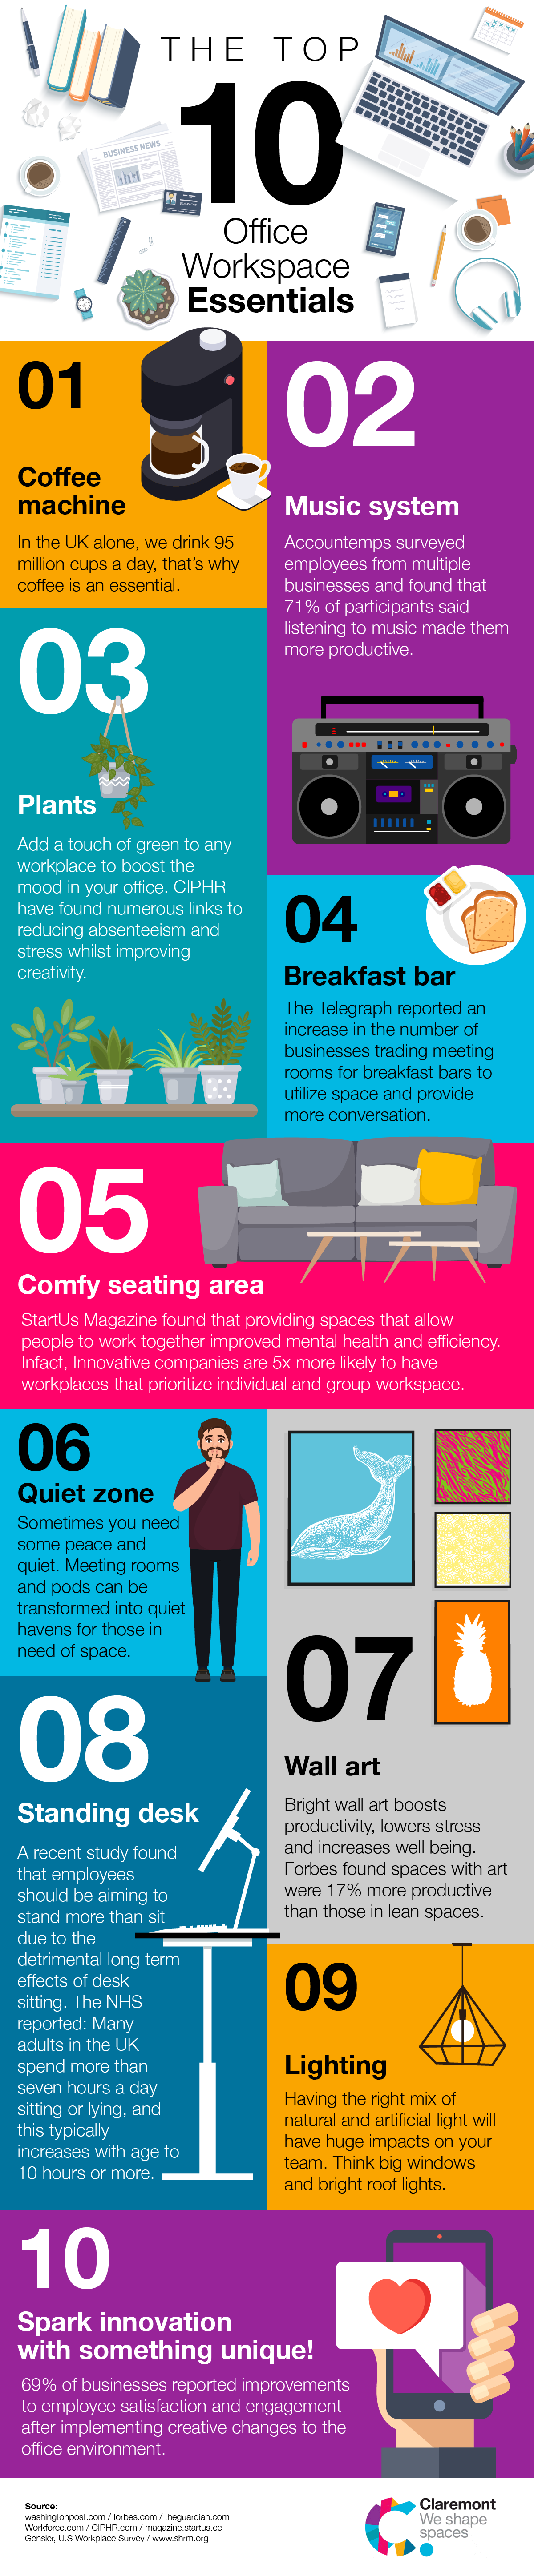 top-office-workspace-essentials-infographic-plaza